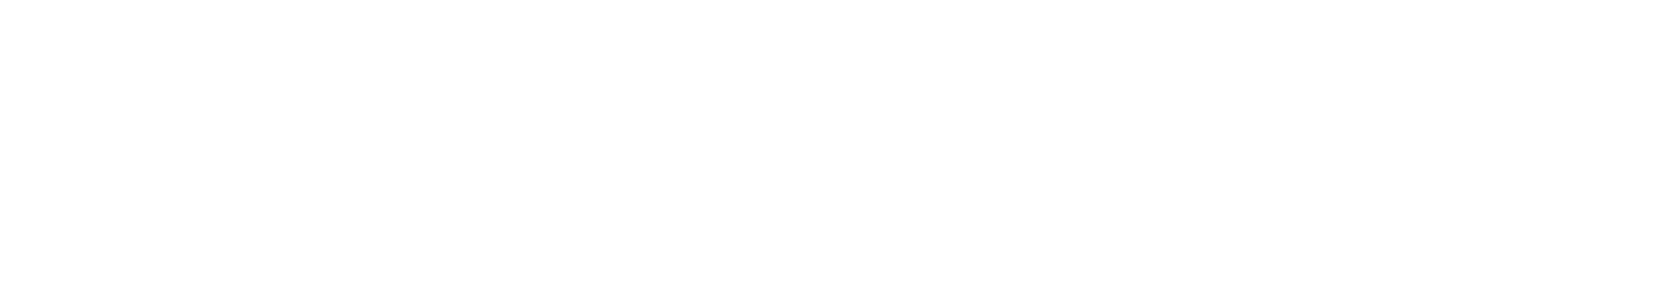 Covenant Network of Presbyterians Logo